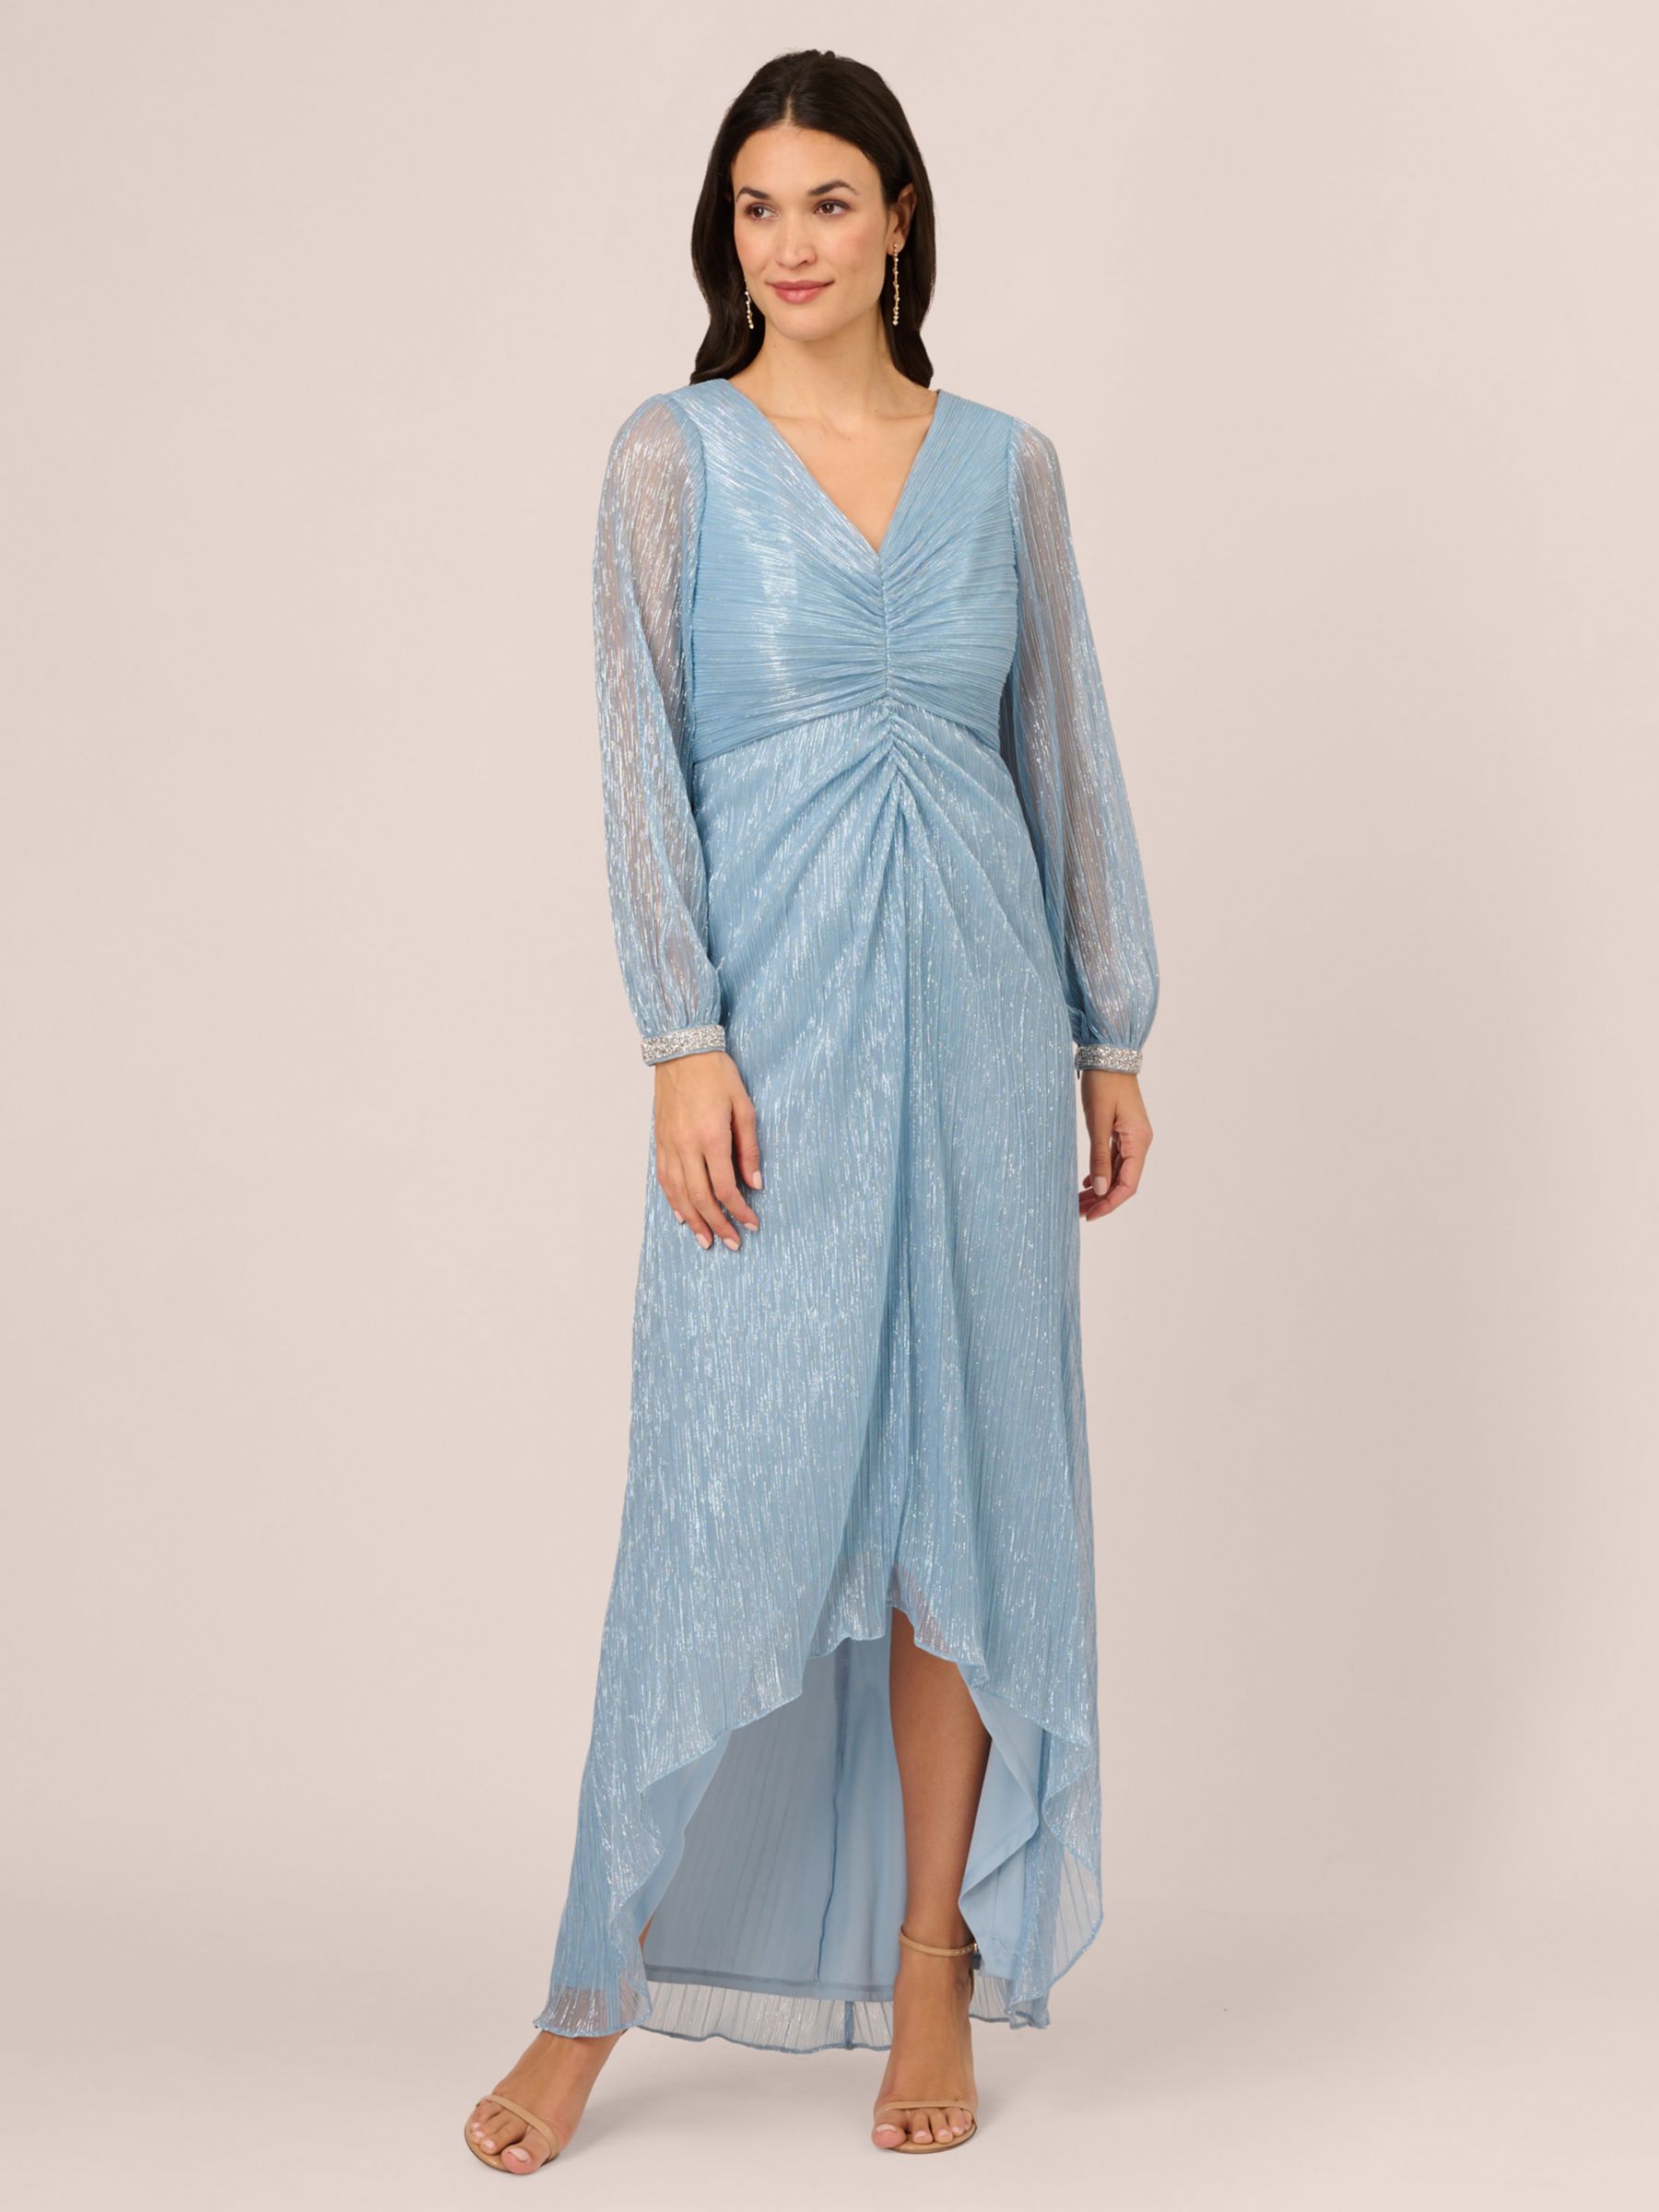 Adrianna Papell Crinkle Metallic Fabric High Low Hem Dress, Belize Blue